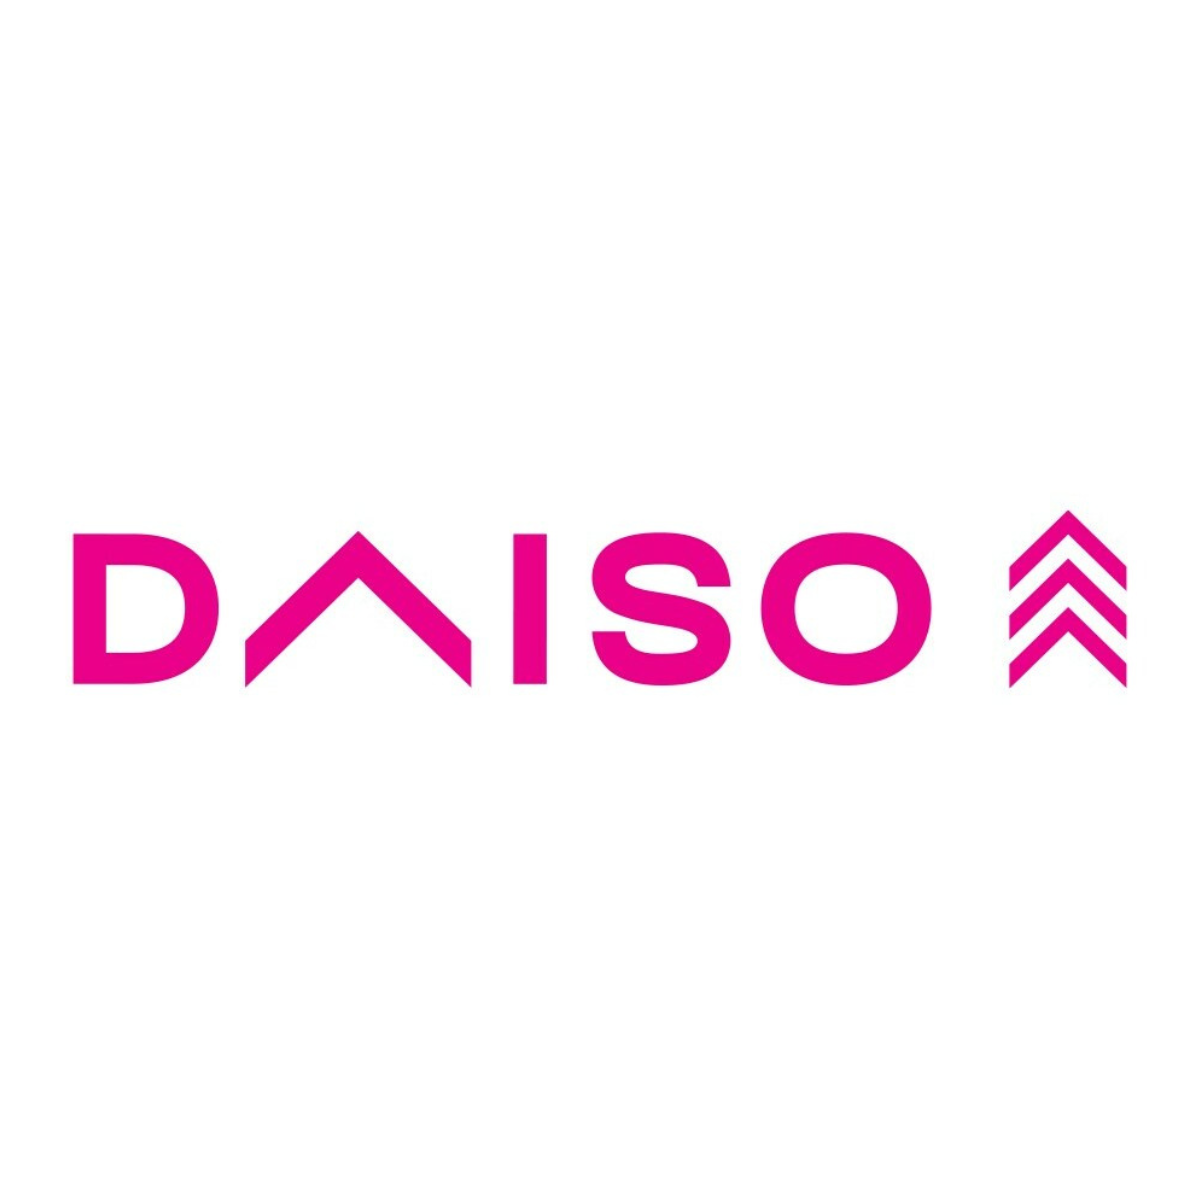 Japanese Retailer Daiso plots distribution center in DeSoto